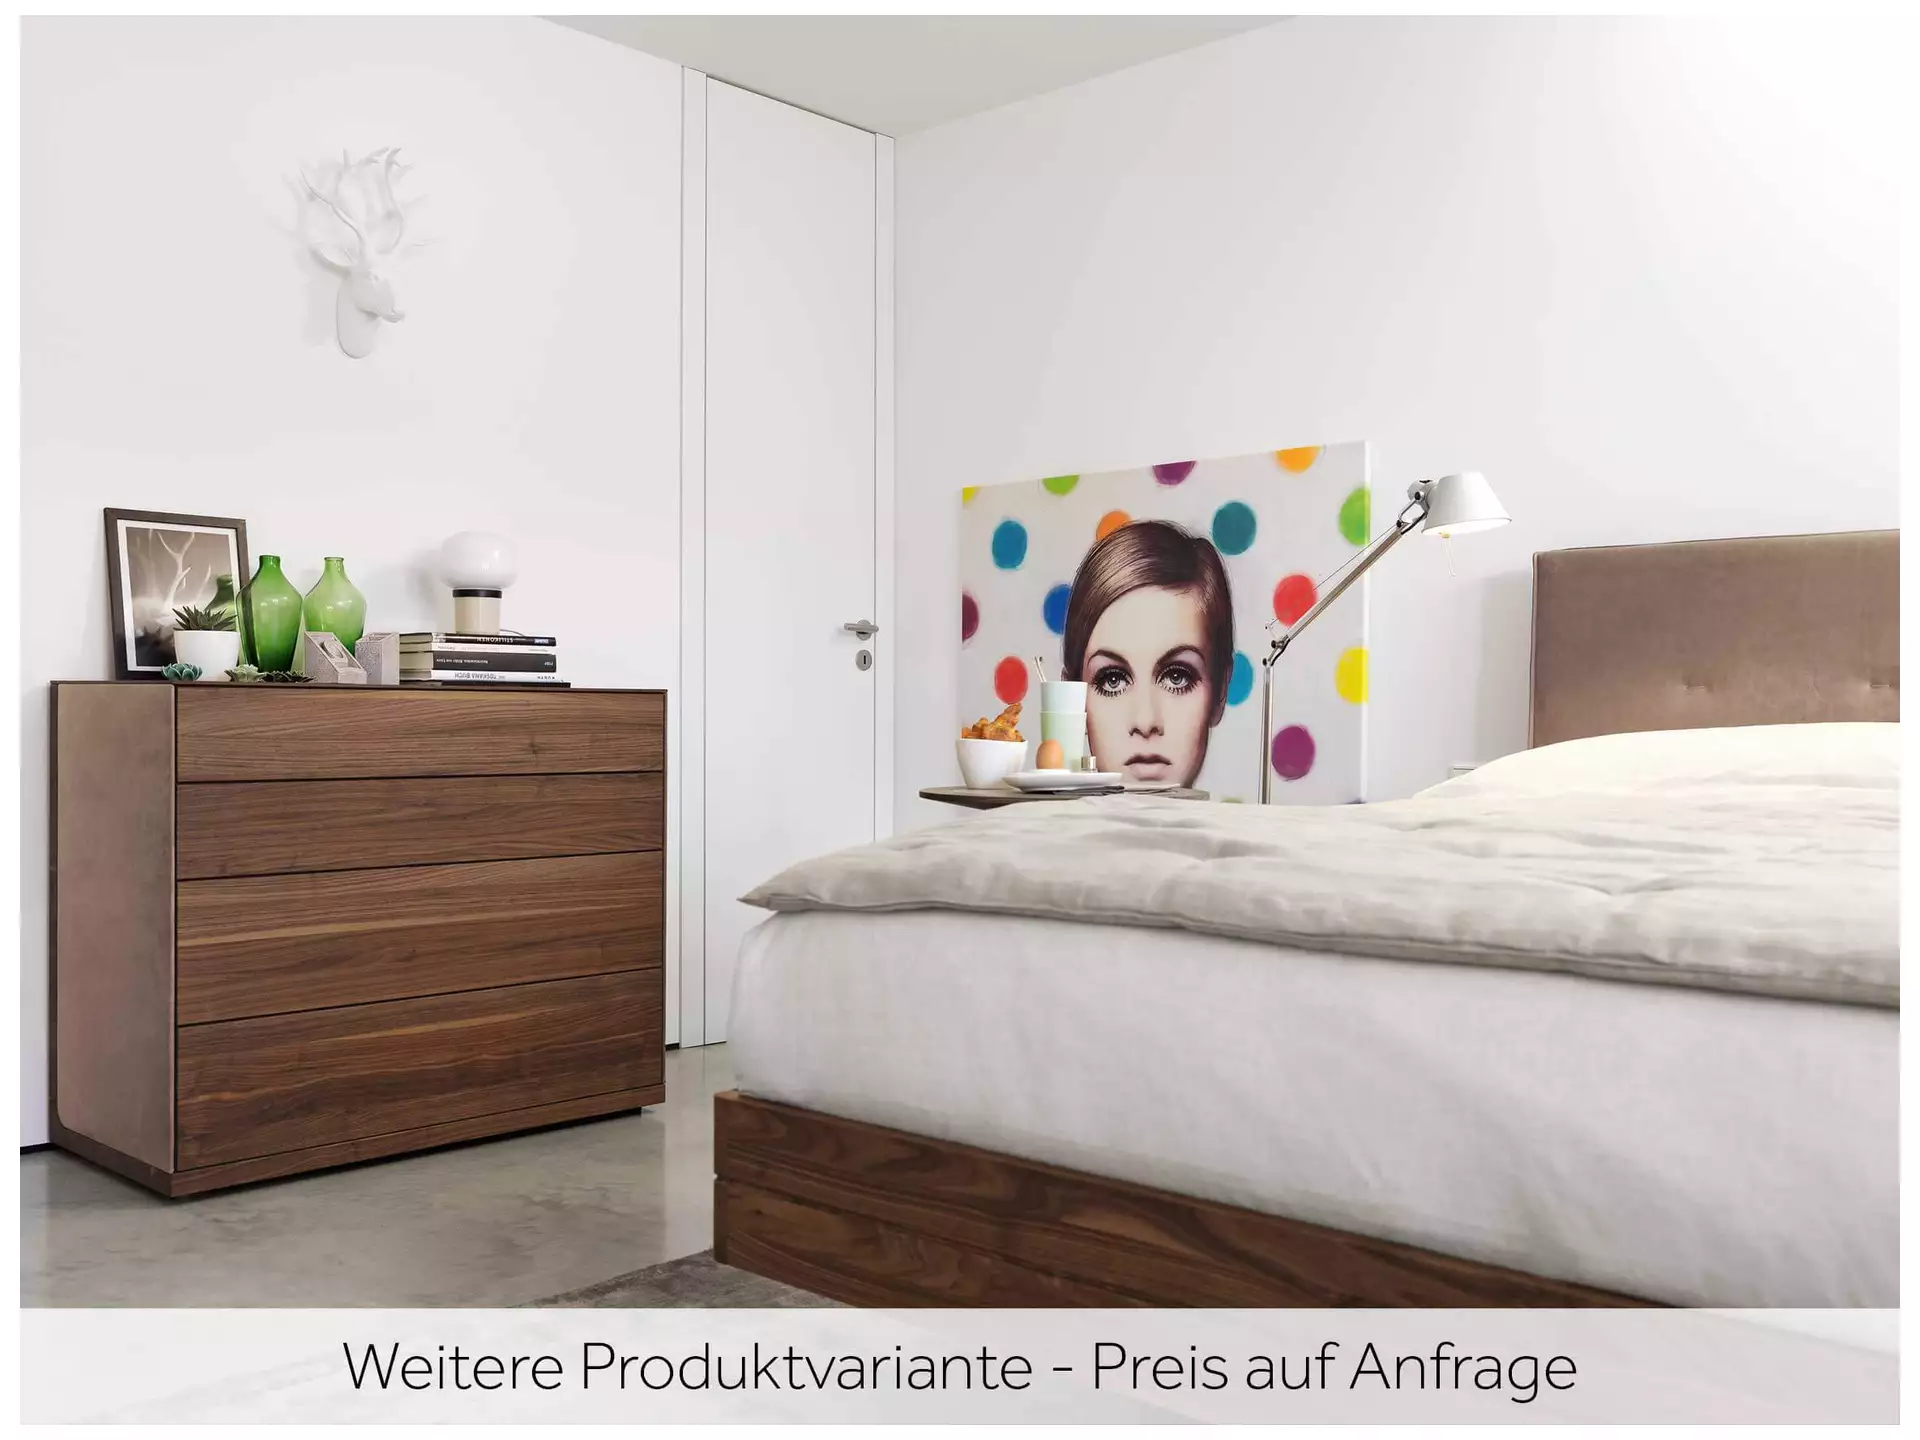 Bett Riletto Team 7 / Farbe: Holzfarbig, Grau / Material: